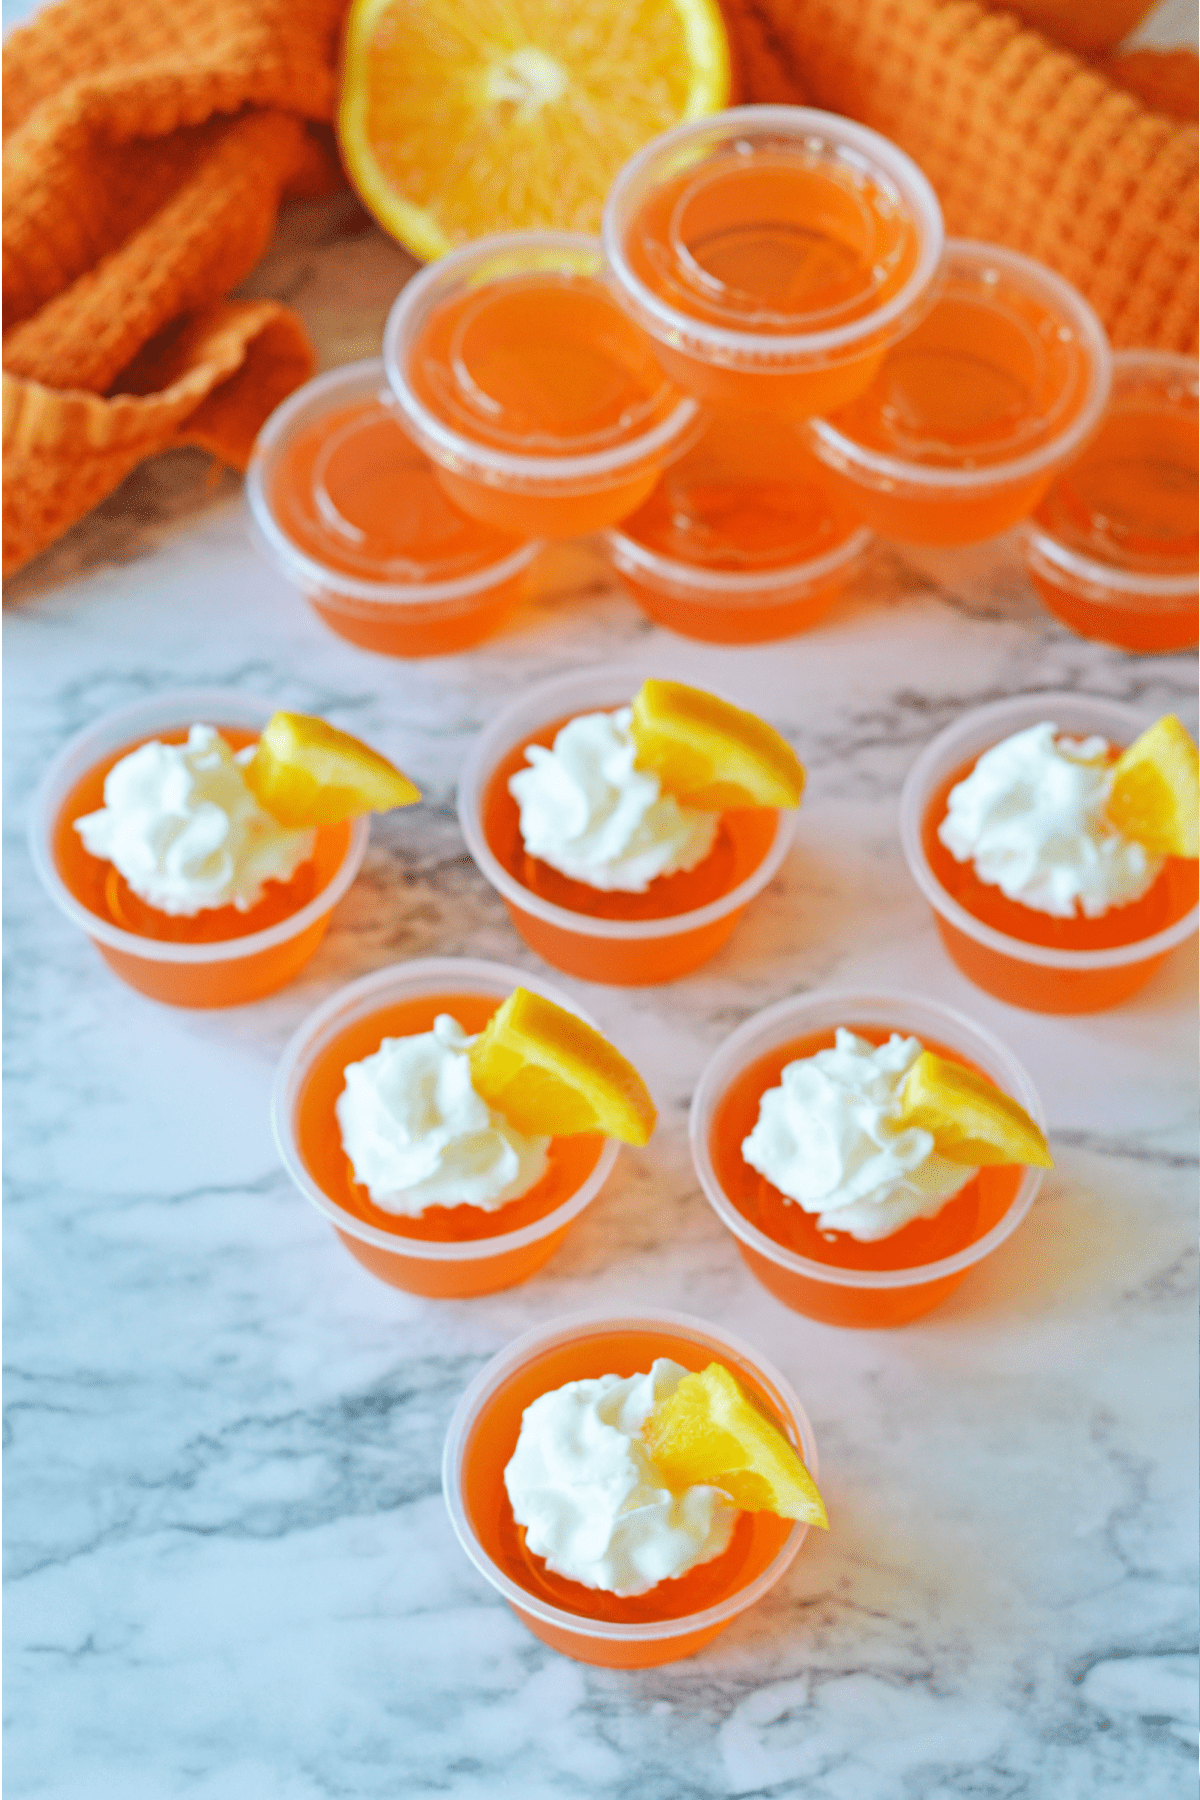 Orange creamsicle jello shots from above